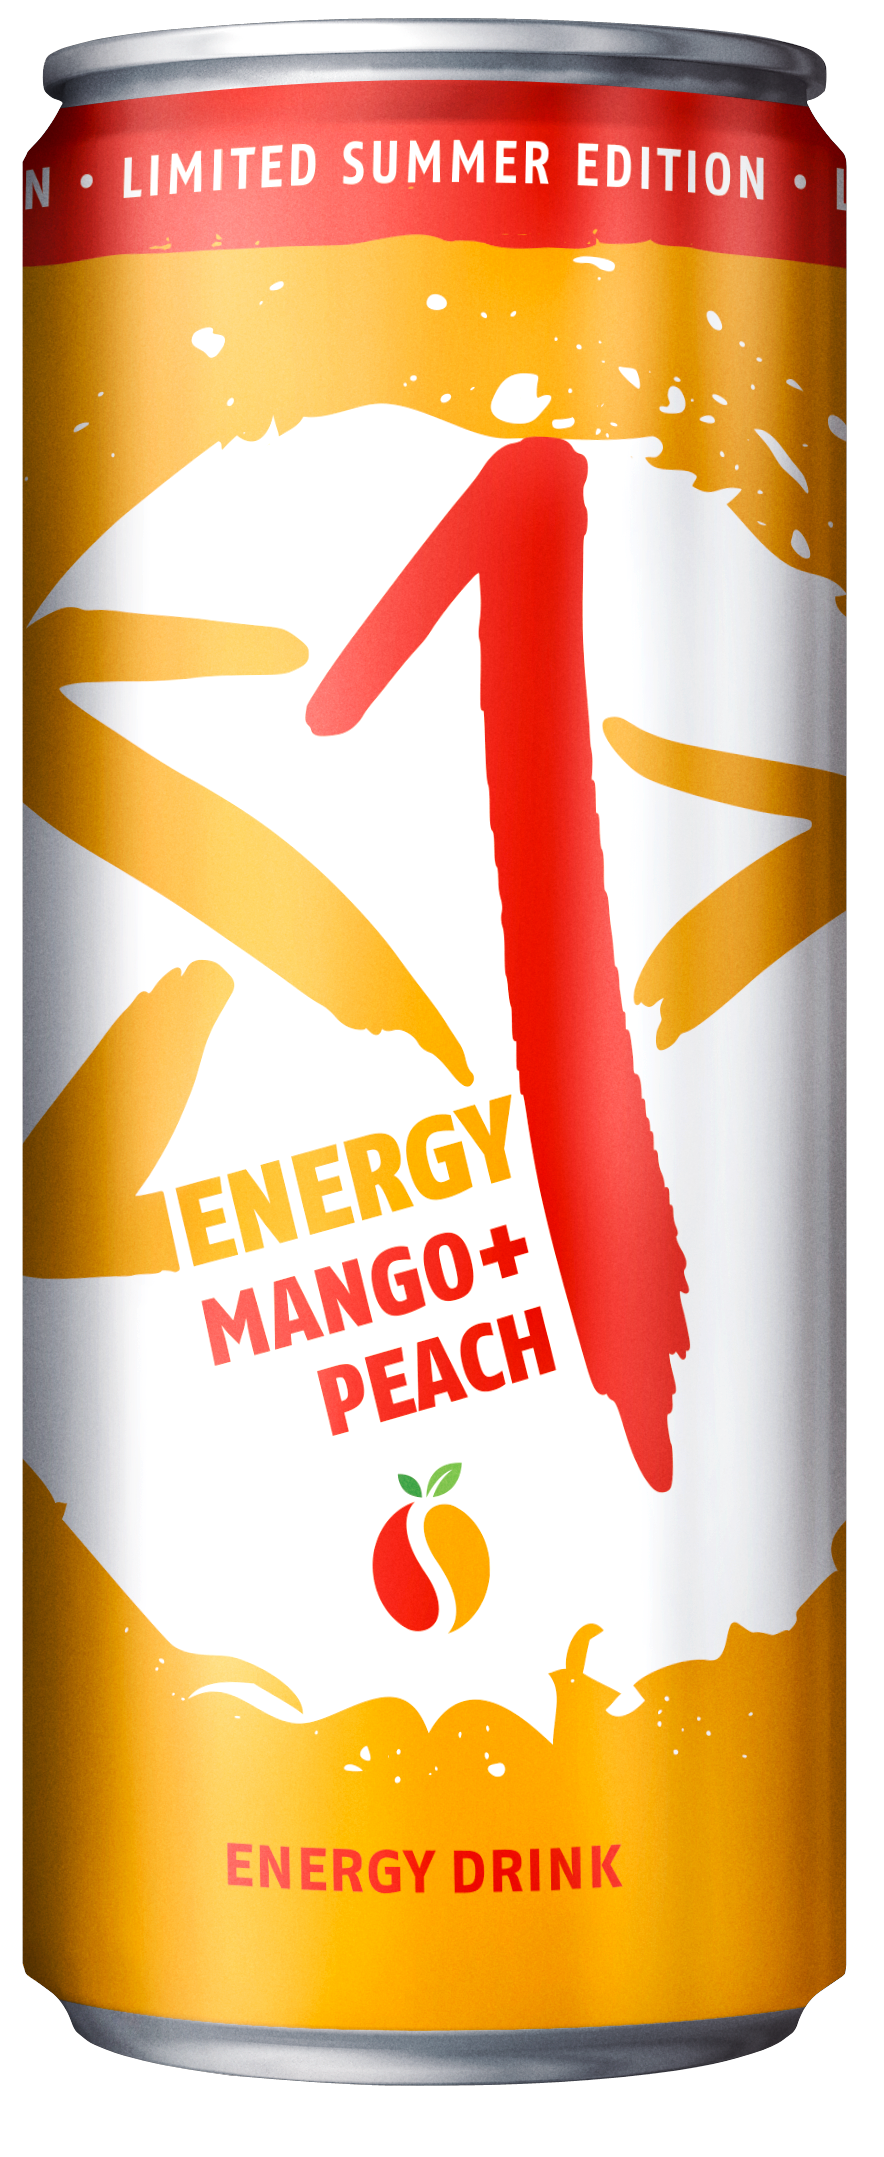 star energy drink limited edition mango+peach © ORLEN Deutschland GmbH_eng.png